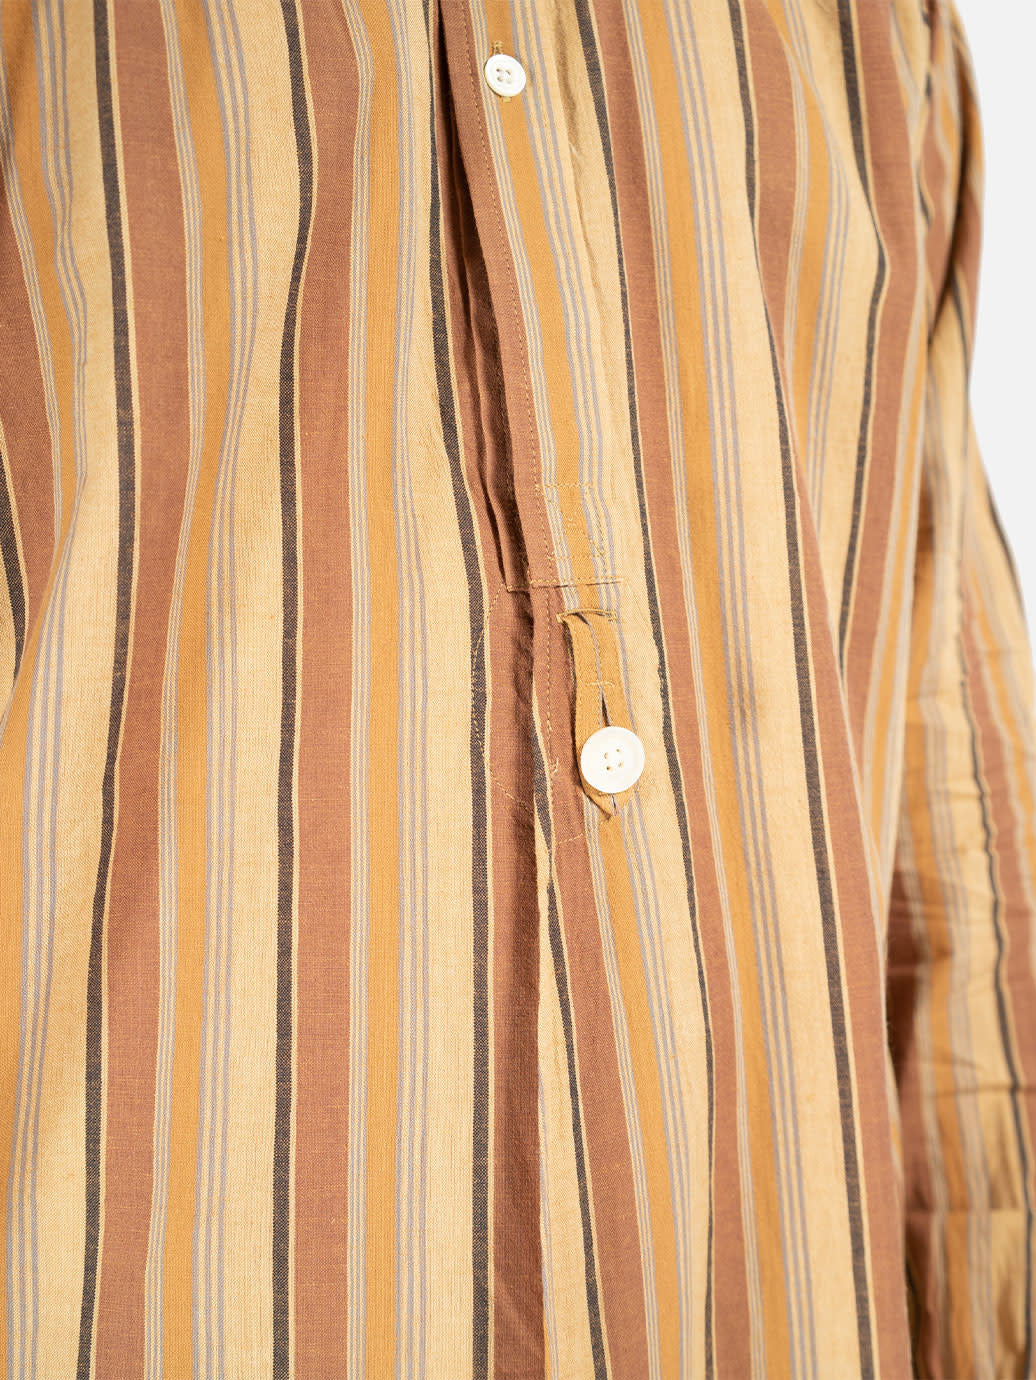 Needles Pinhole Regular Collar EDW Shirt - India Cotton Yellow/ Brown